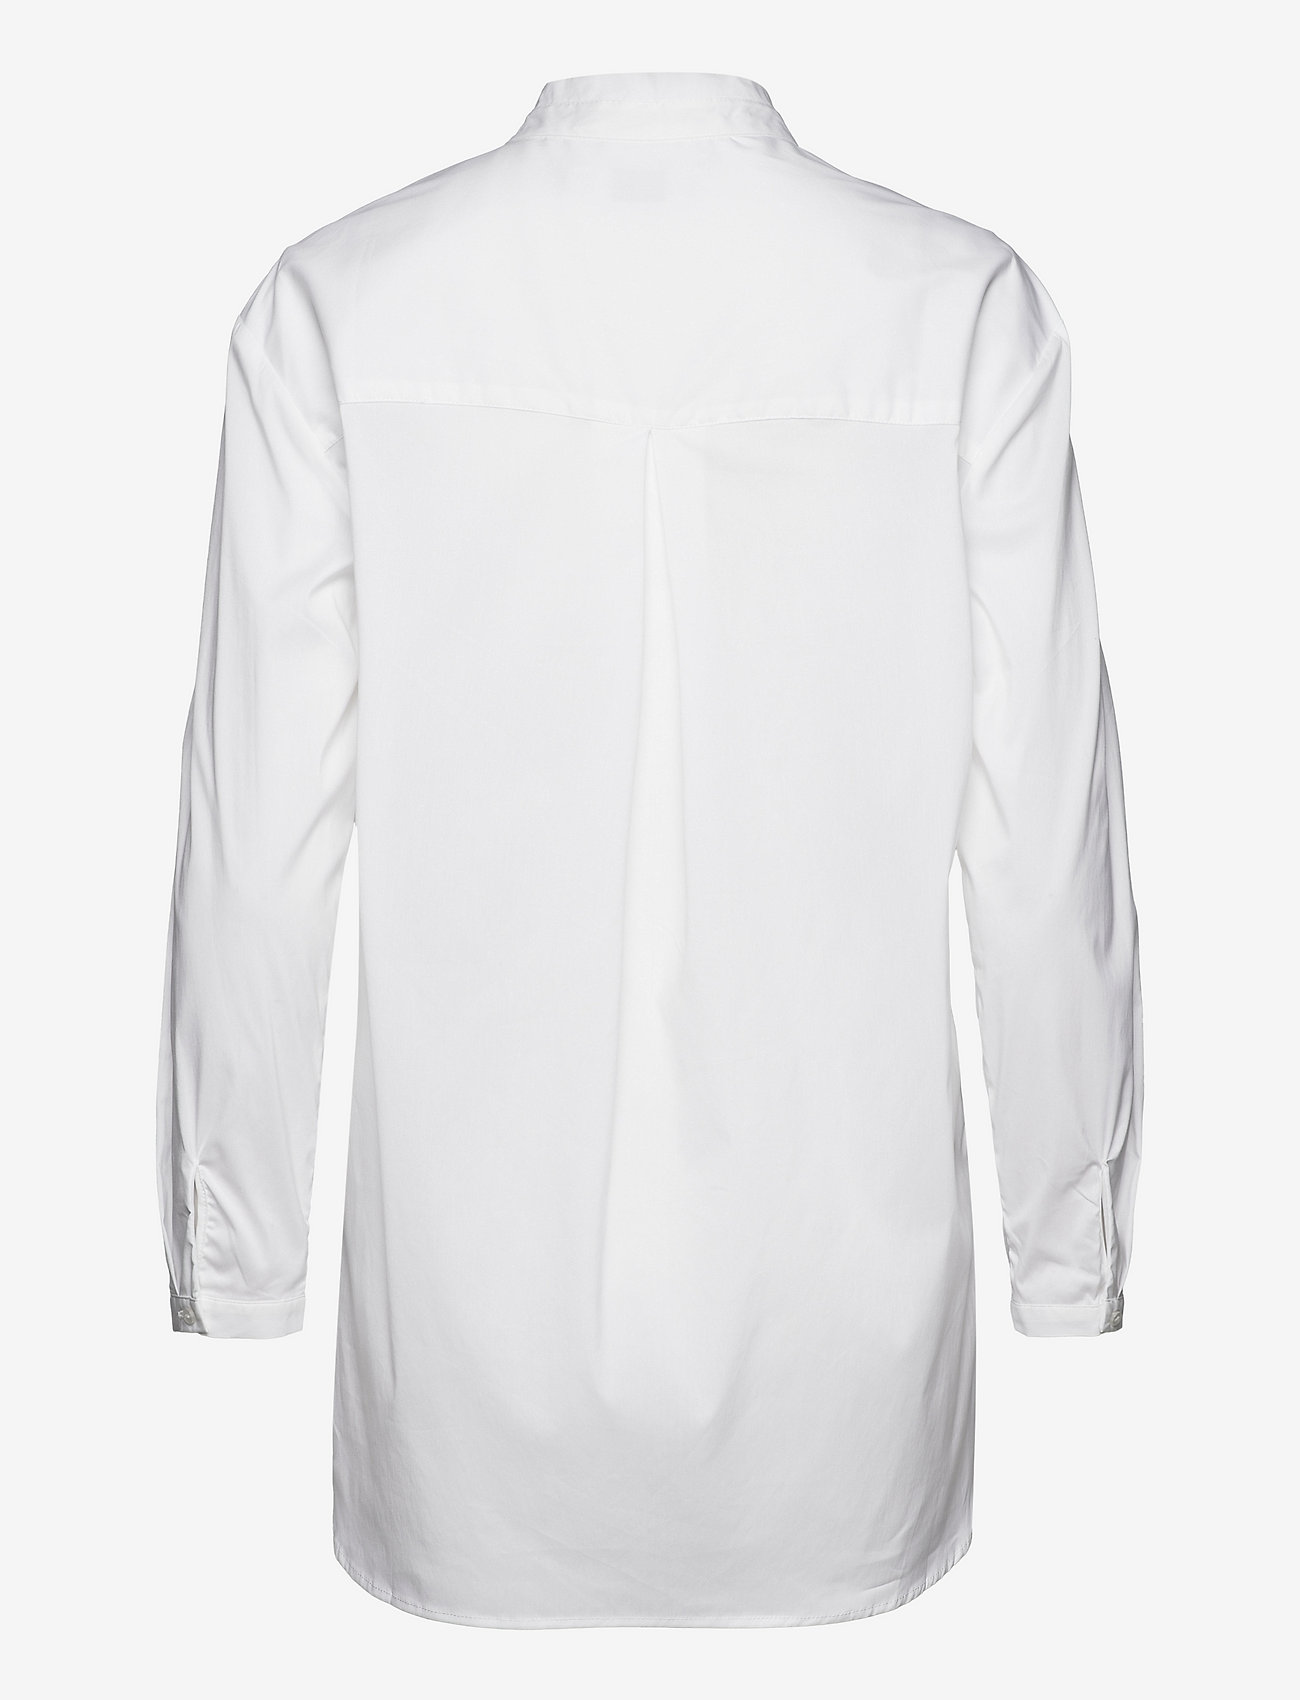 Cream - CRLeonora Shirt - langärmlige hemden - snow white - 1